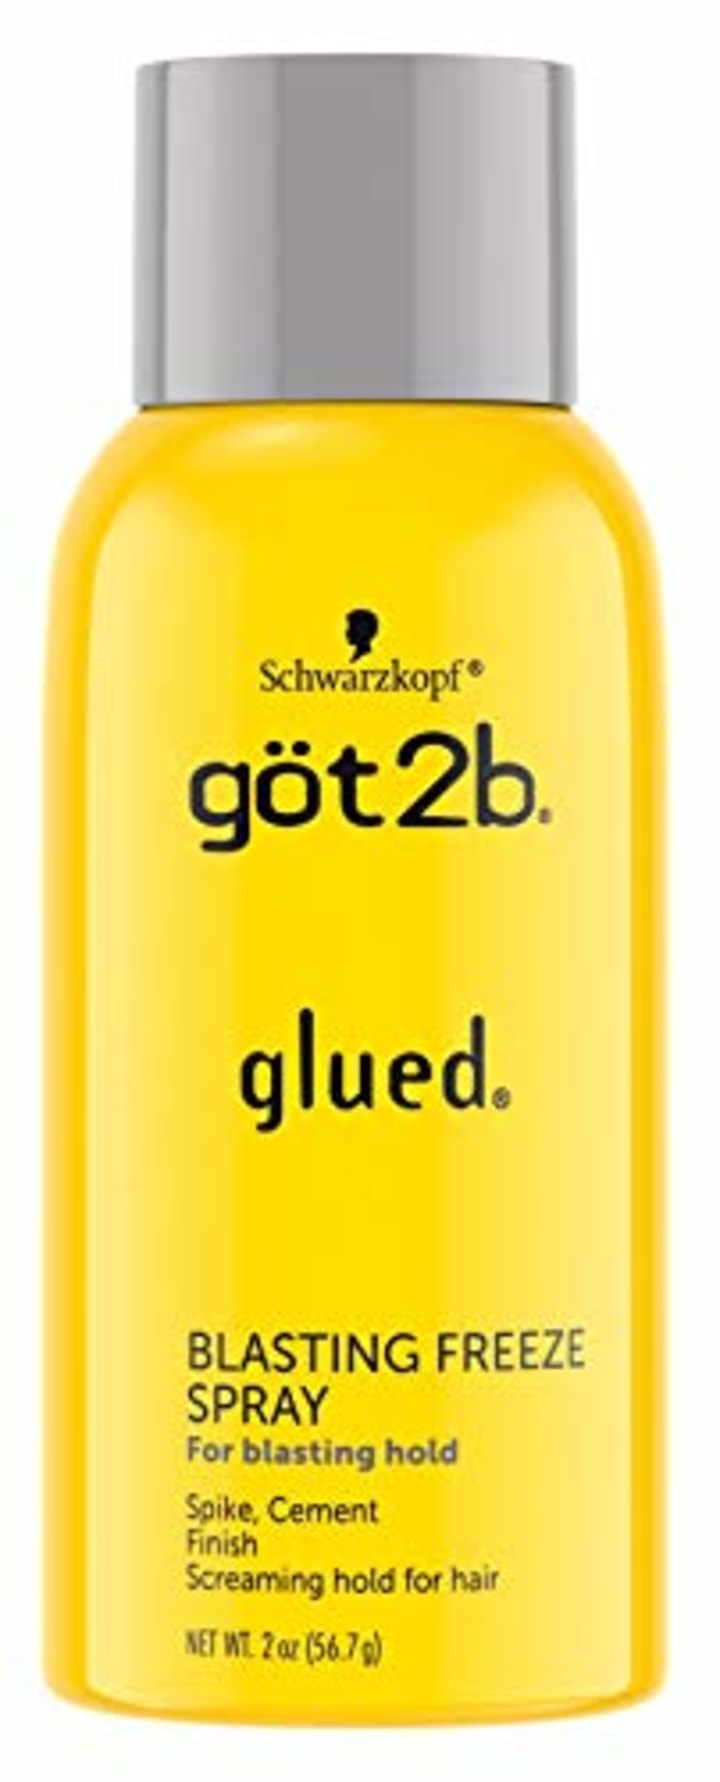 GOT 2B Glued Blasting Freeze Spray, 12 Ounce (Pack of 2)